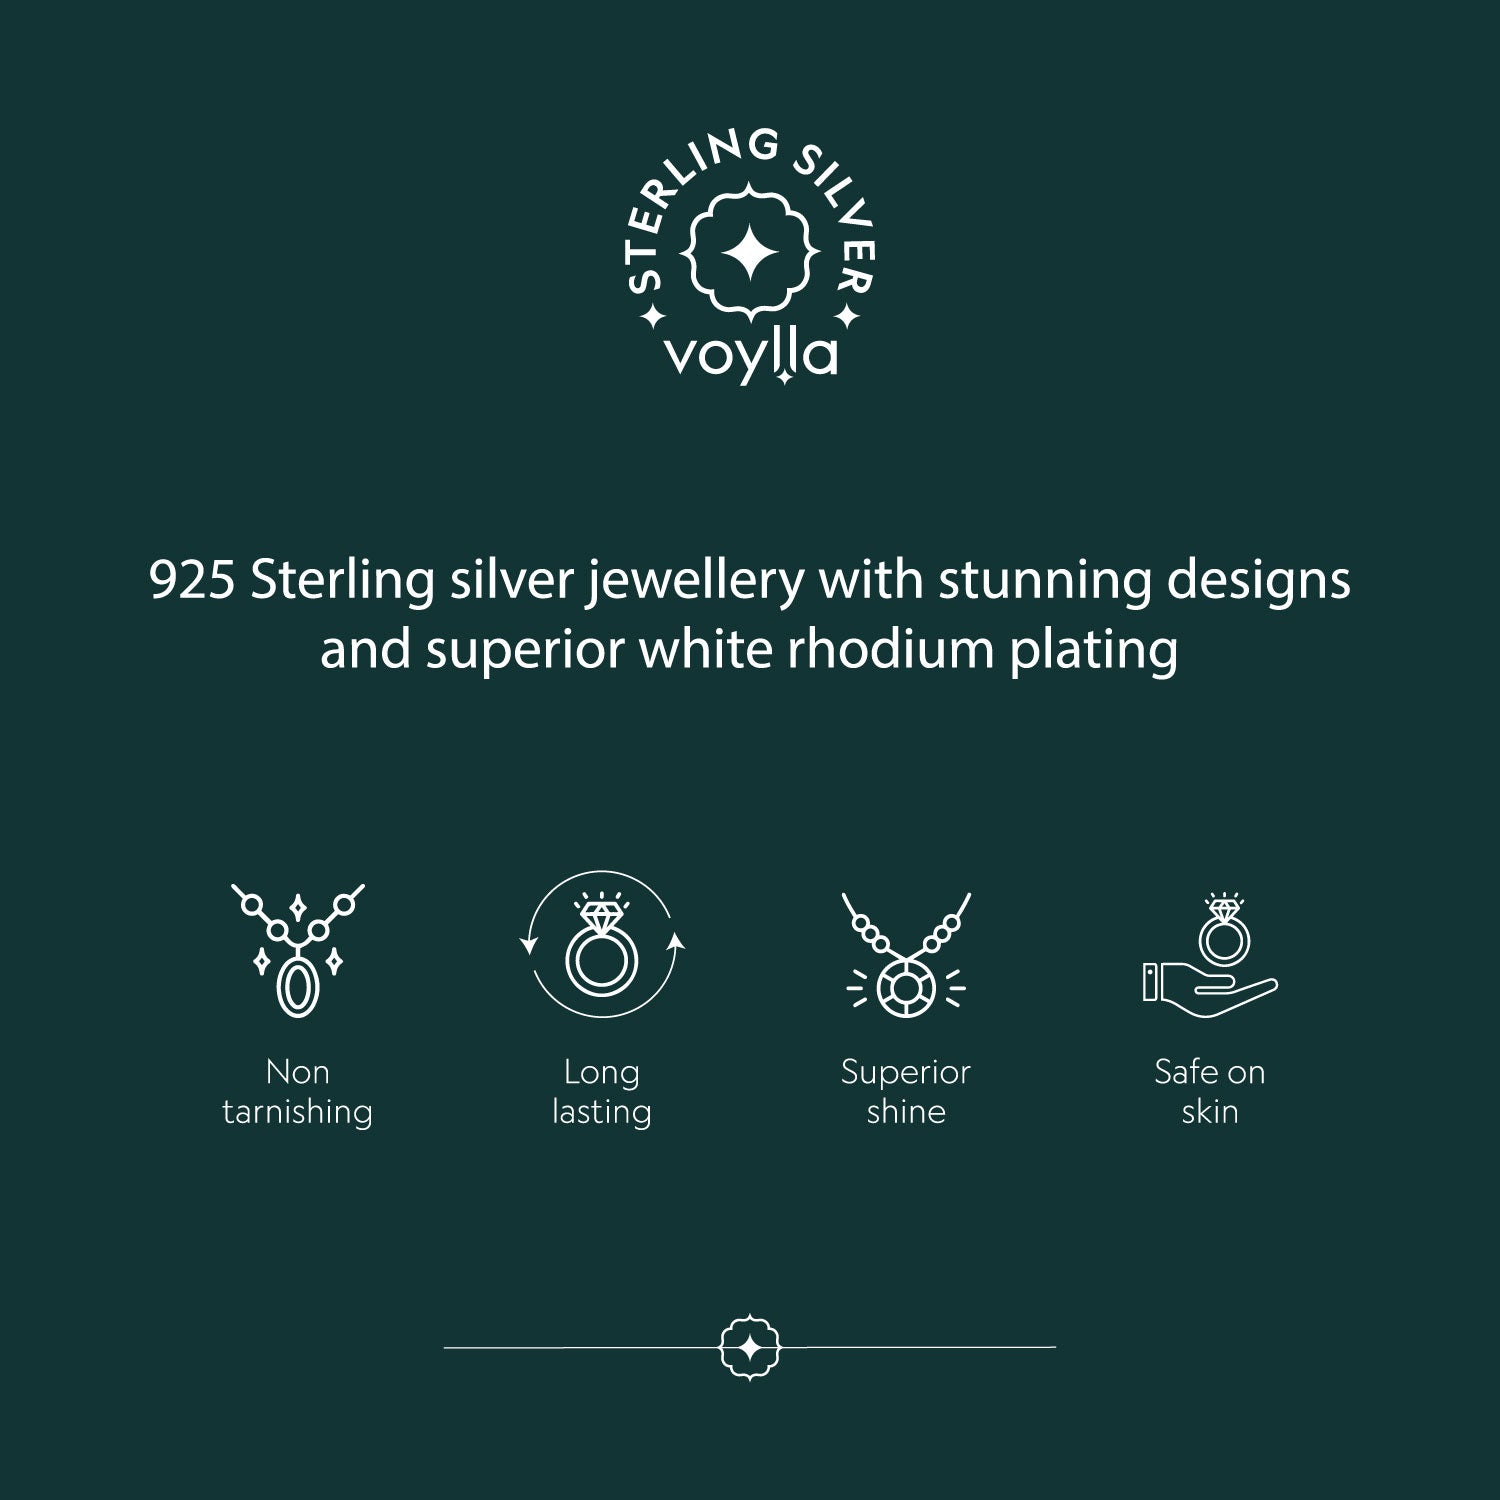 Sterling Silver Star Studded Heart Earrings